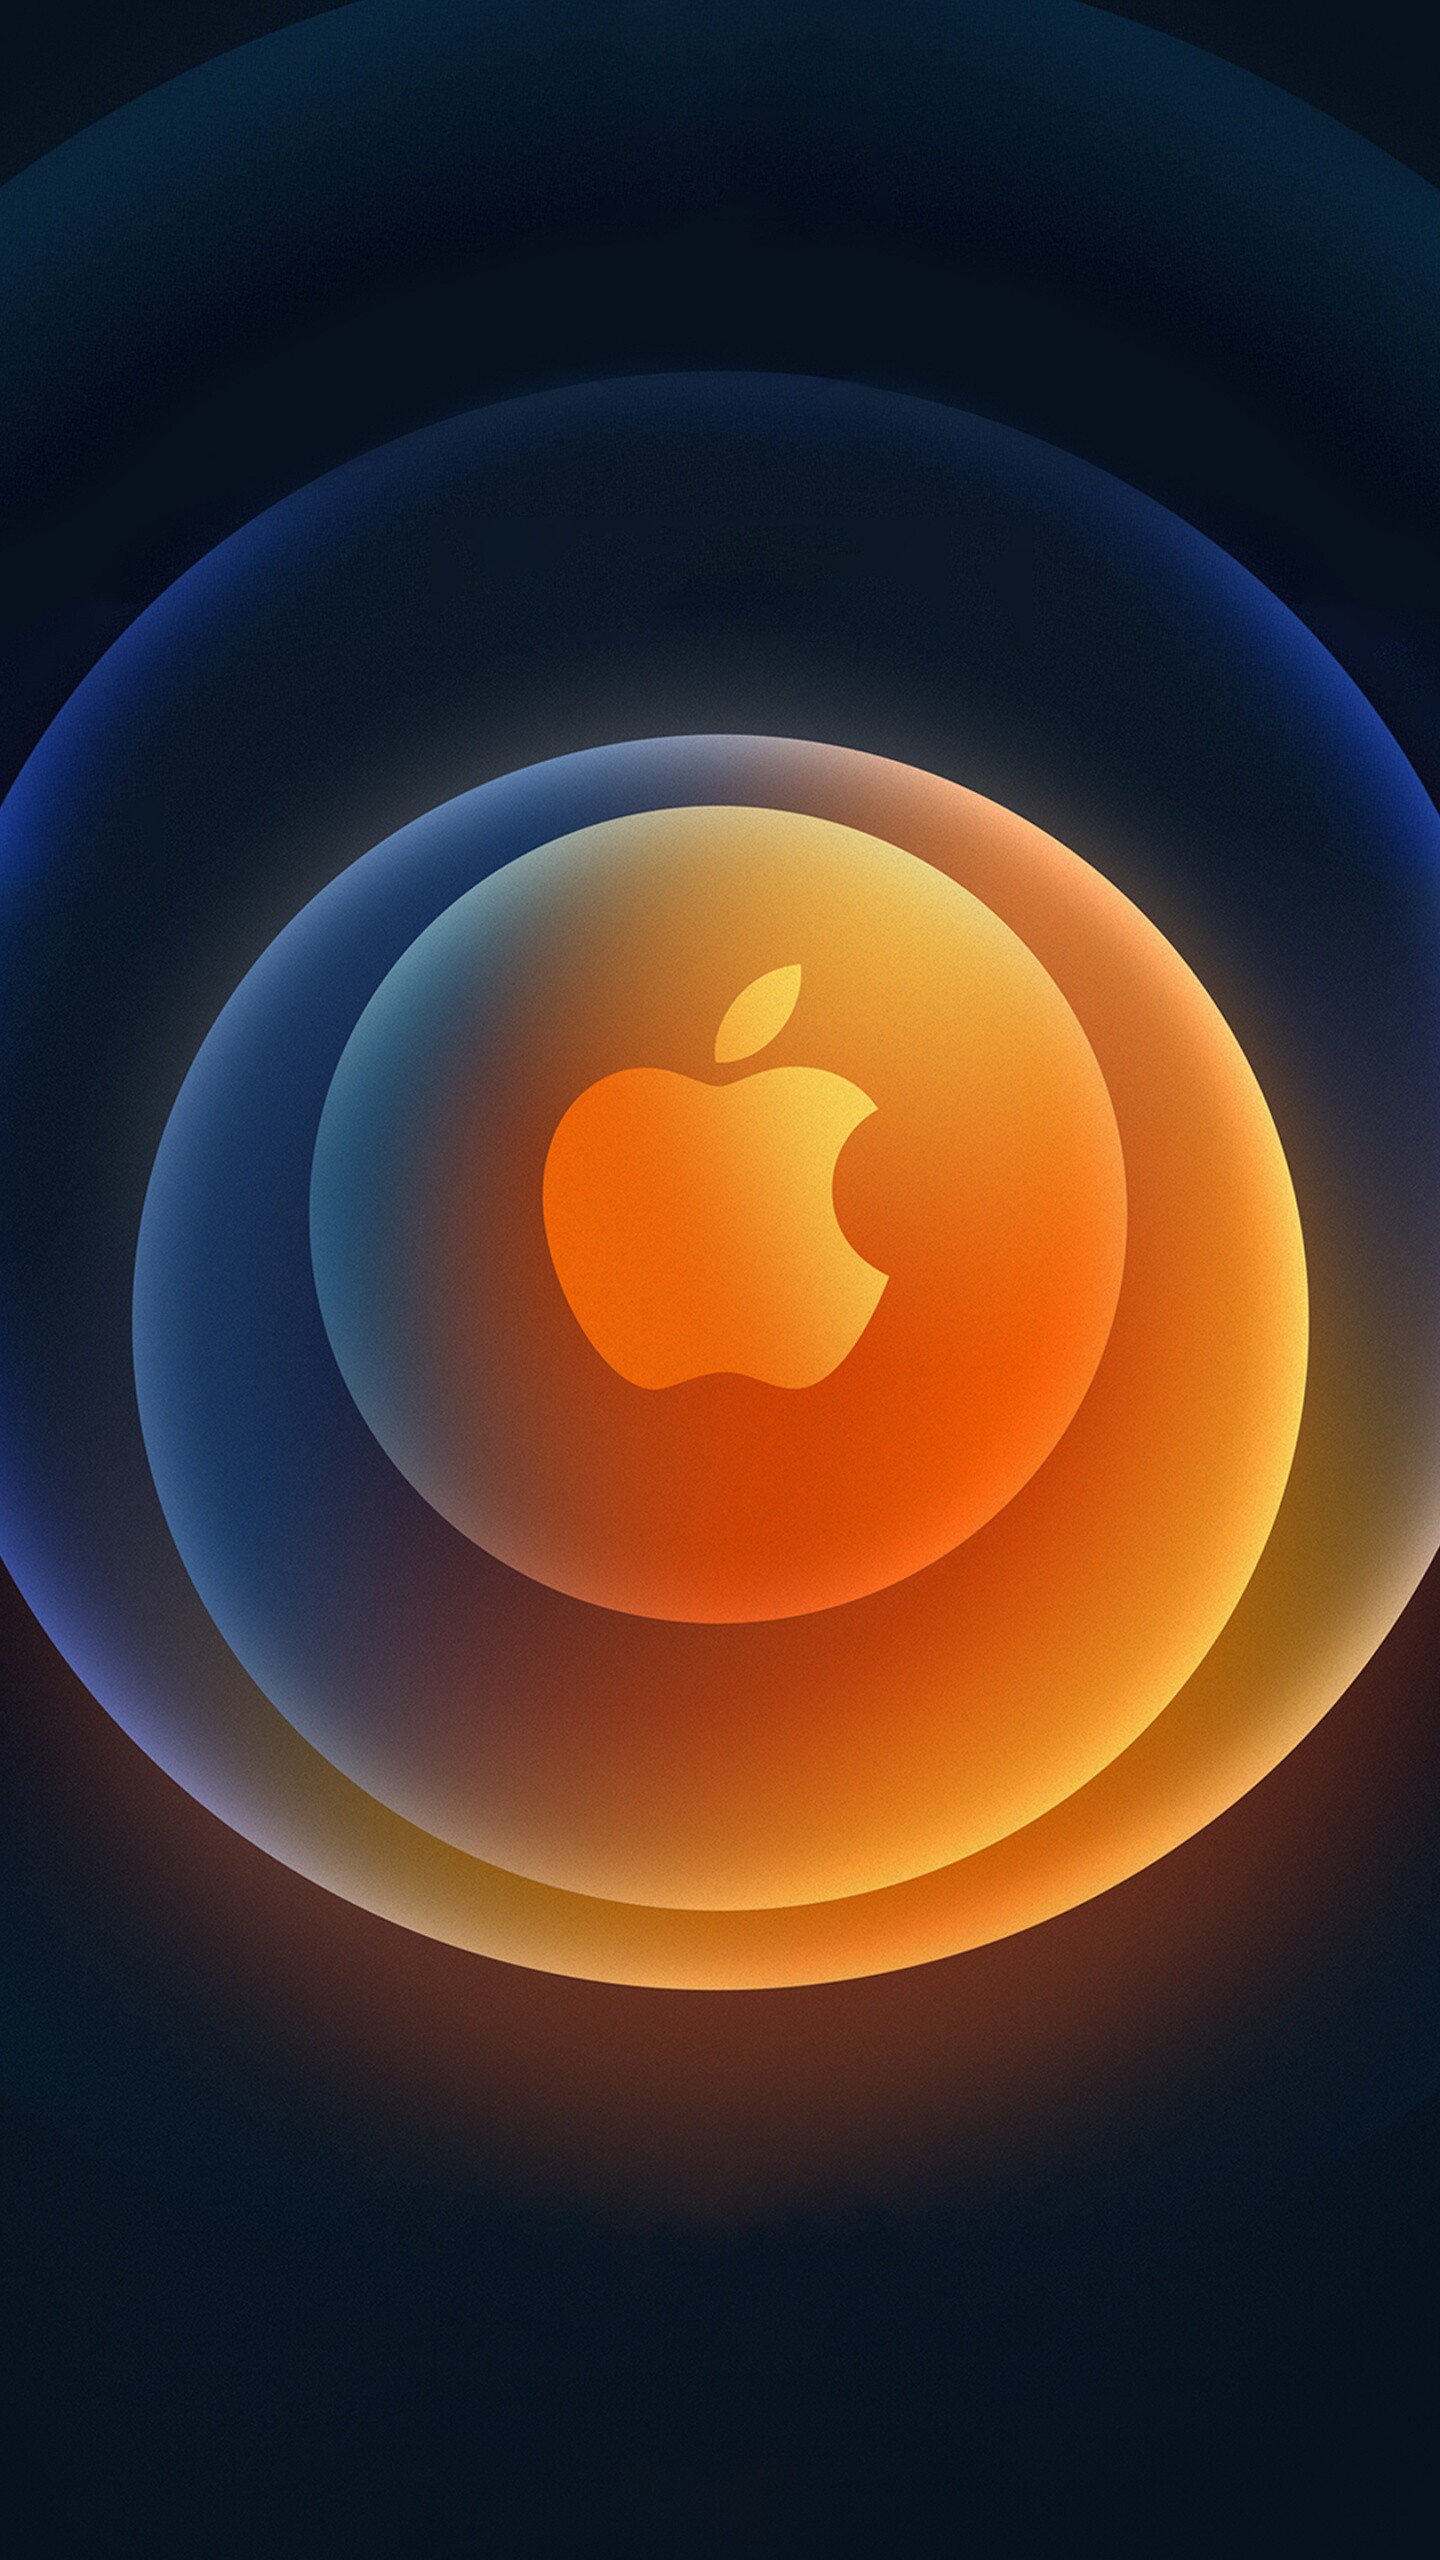 Apple Logo: Famous brand, iPhone, Technology. 1440x2560 HD Wallpaper.